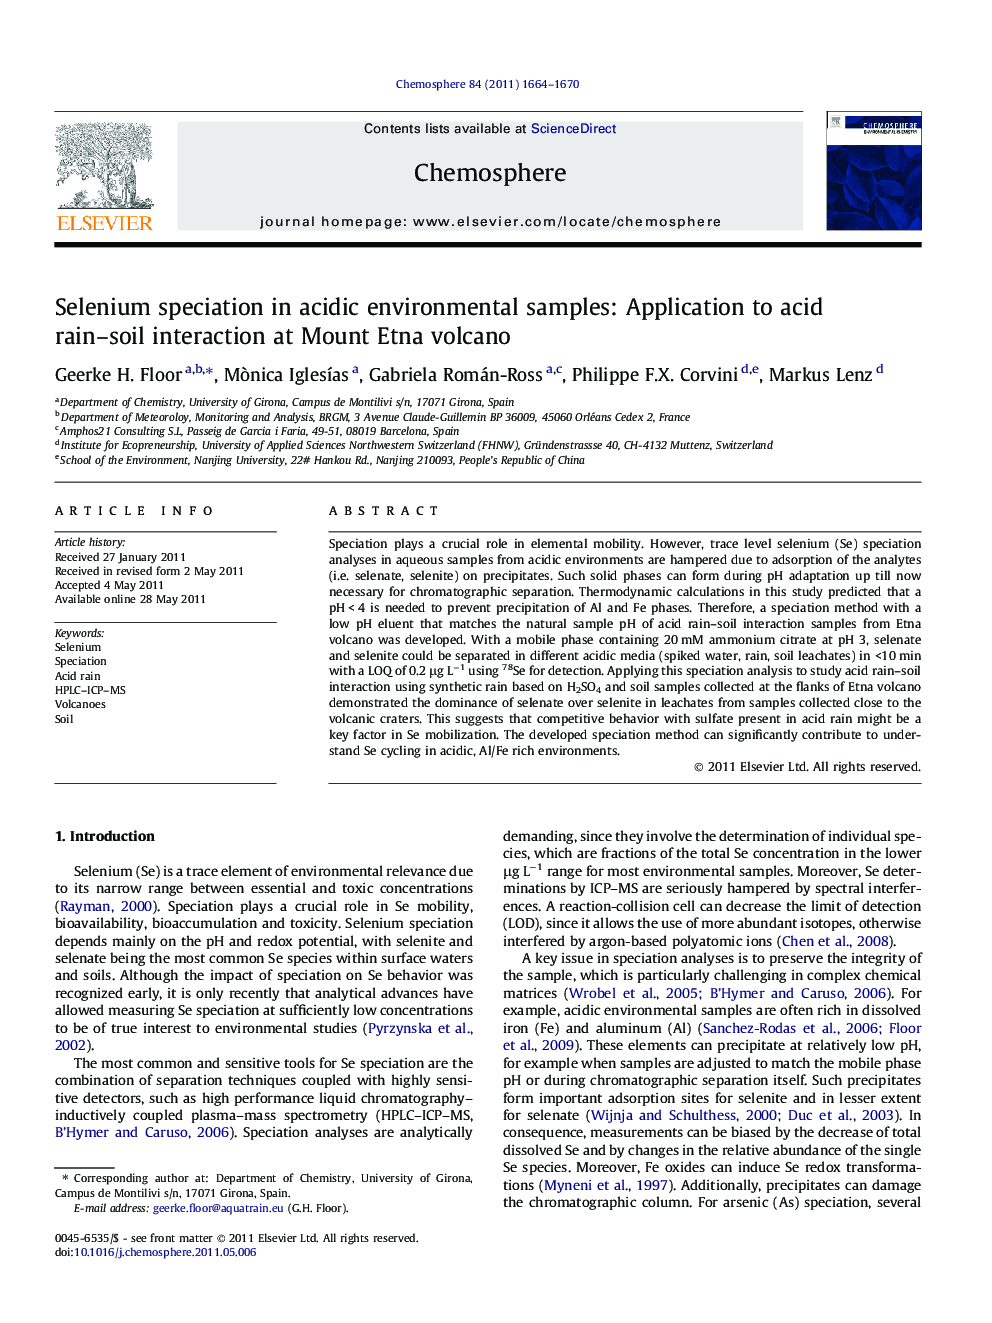 Selenium speciation in acidic environmental samples: Application to acid rain-soil interaction at Mount Etna volcano